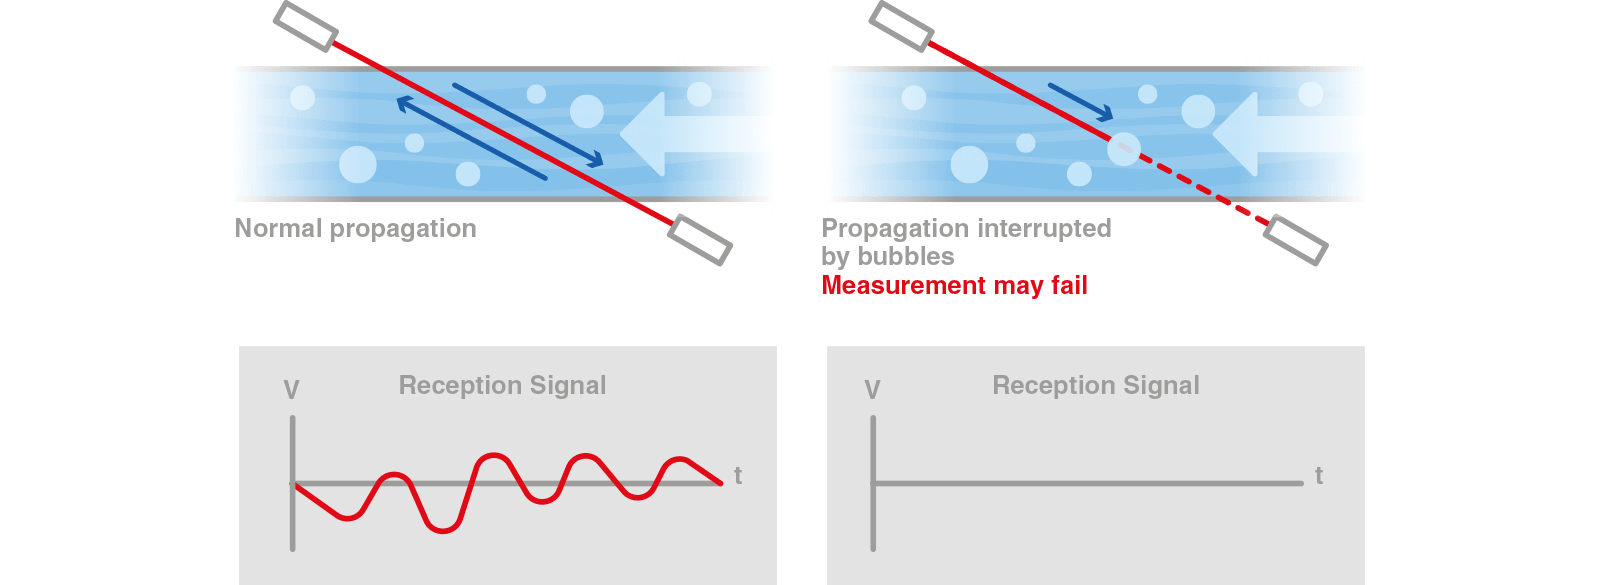 advanced digital signal processing technology diagram